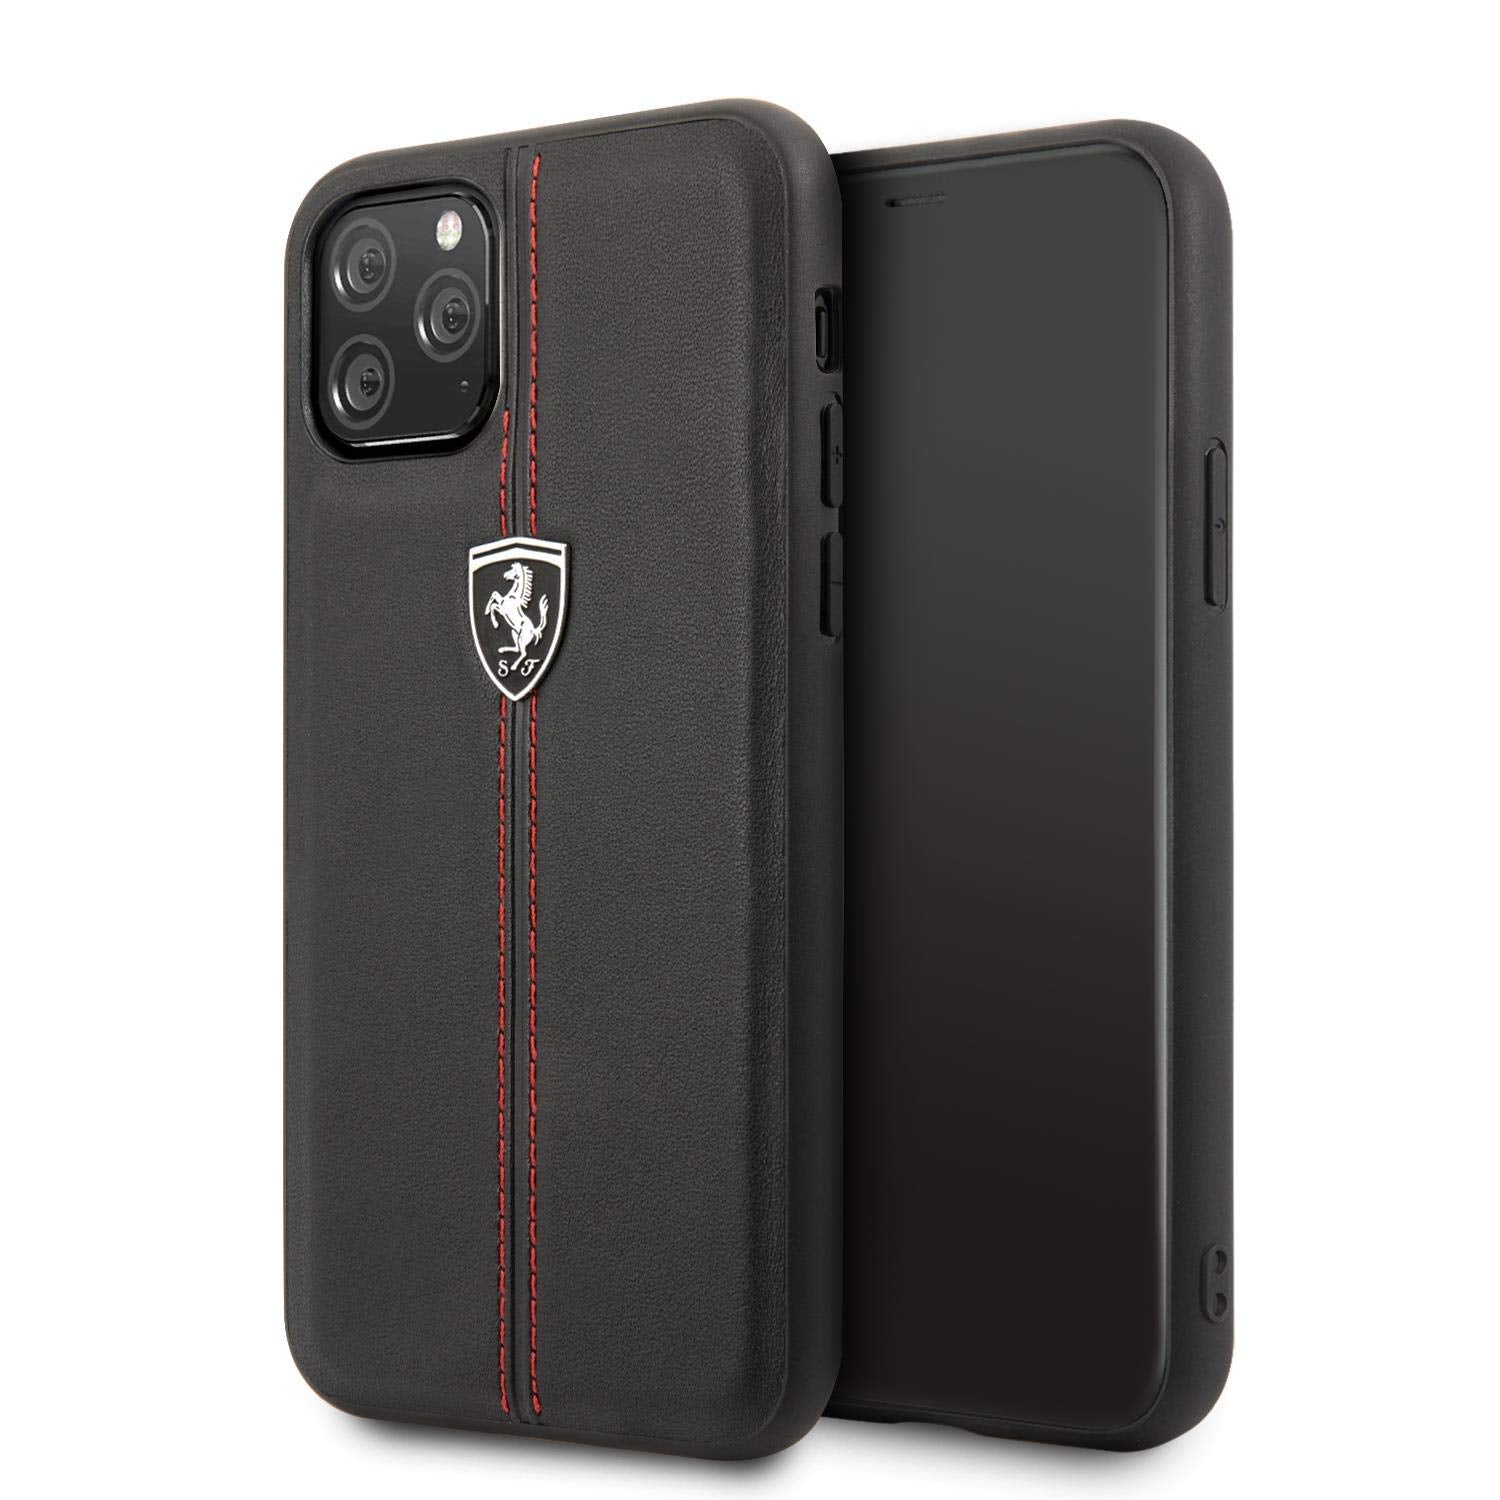 CG Mobile Ferrari Genuine Leather Case for iPhone 11 Pro